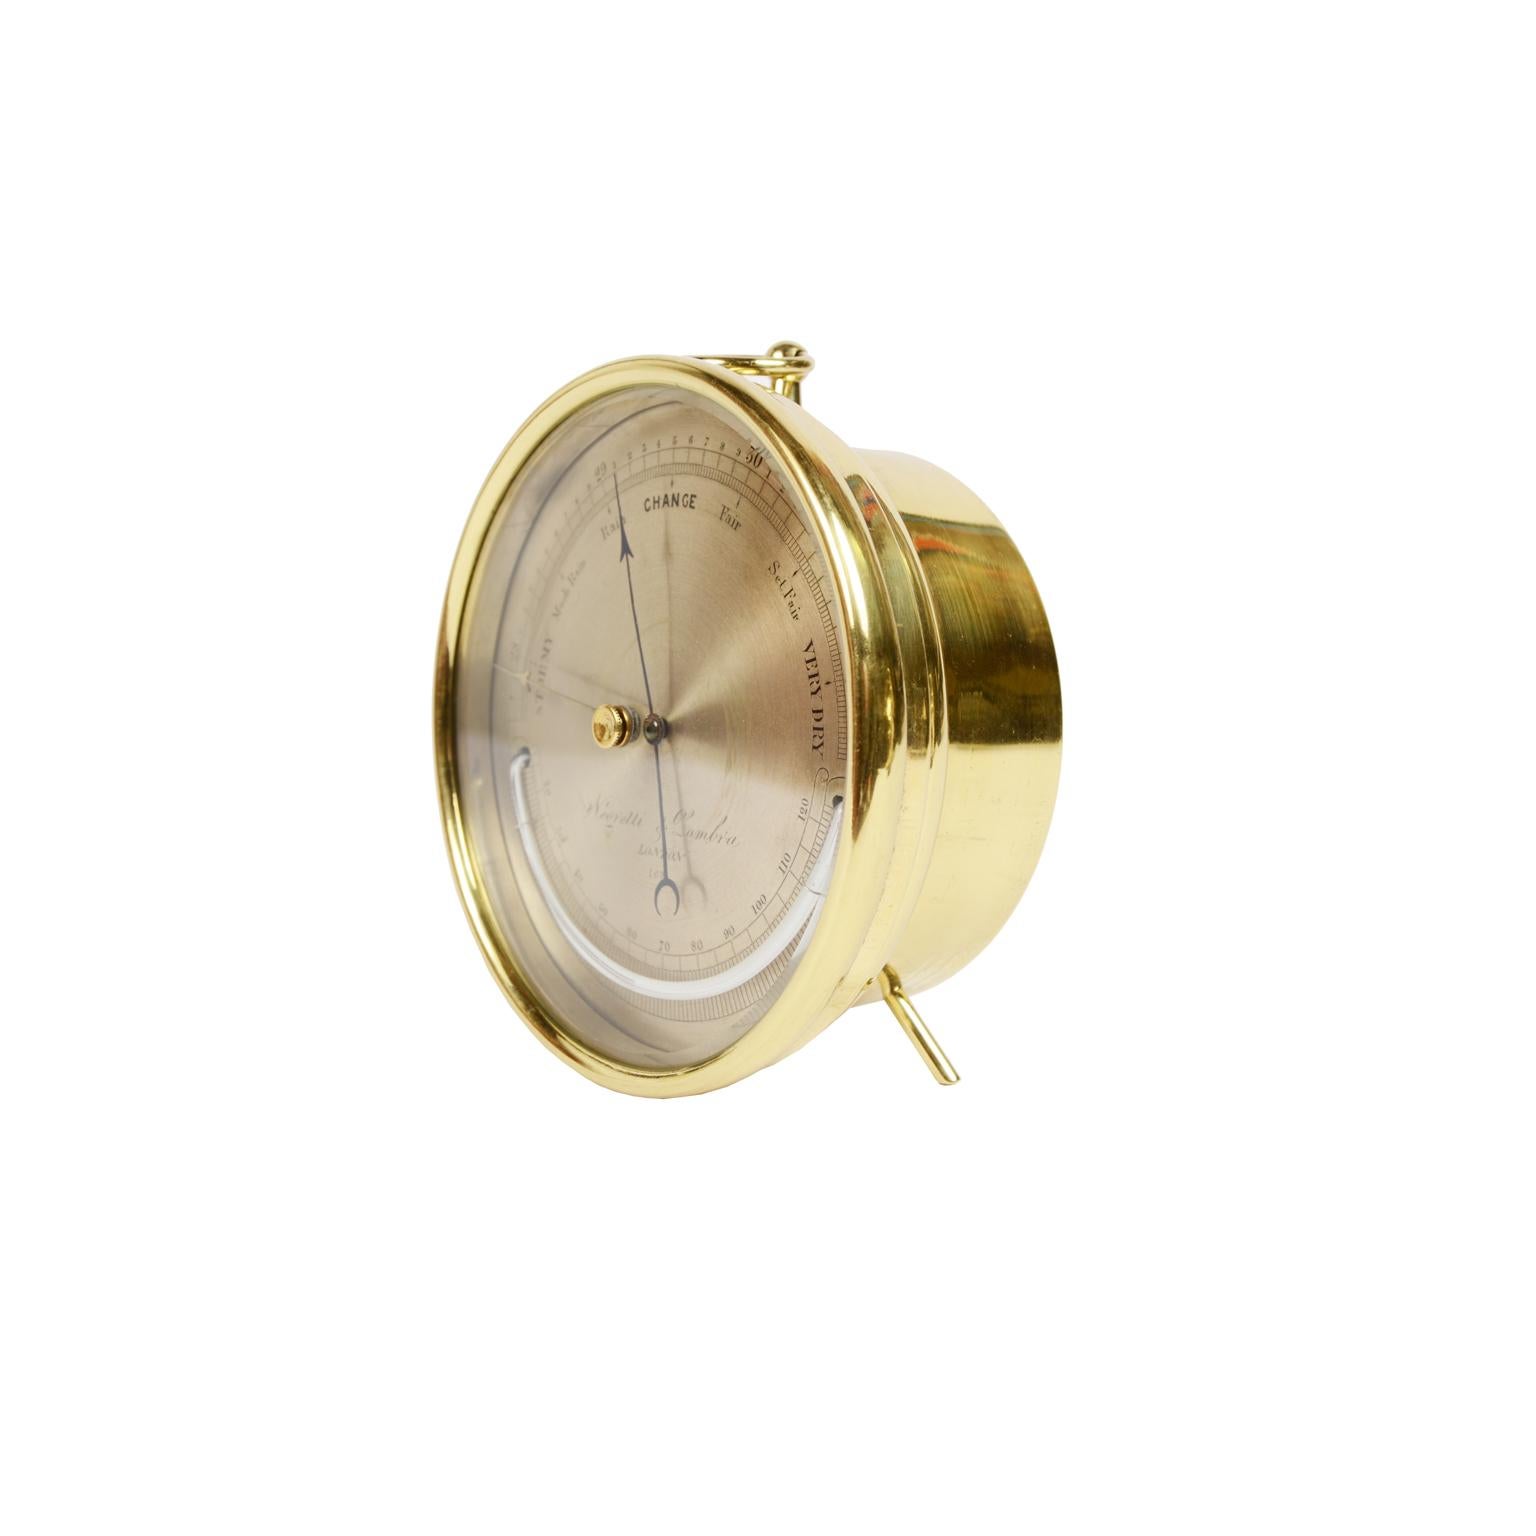 British 19th Century Aneroid Brass Barometer Measuring Instrument by Negretti & Zambra 